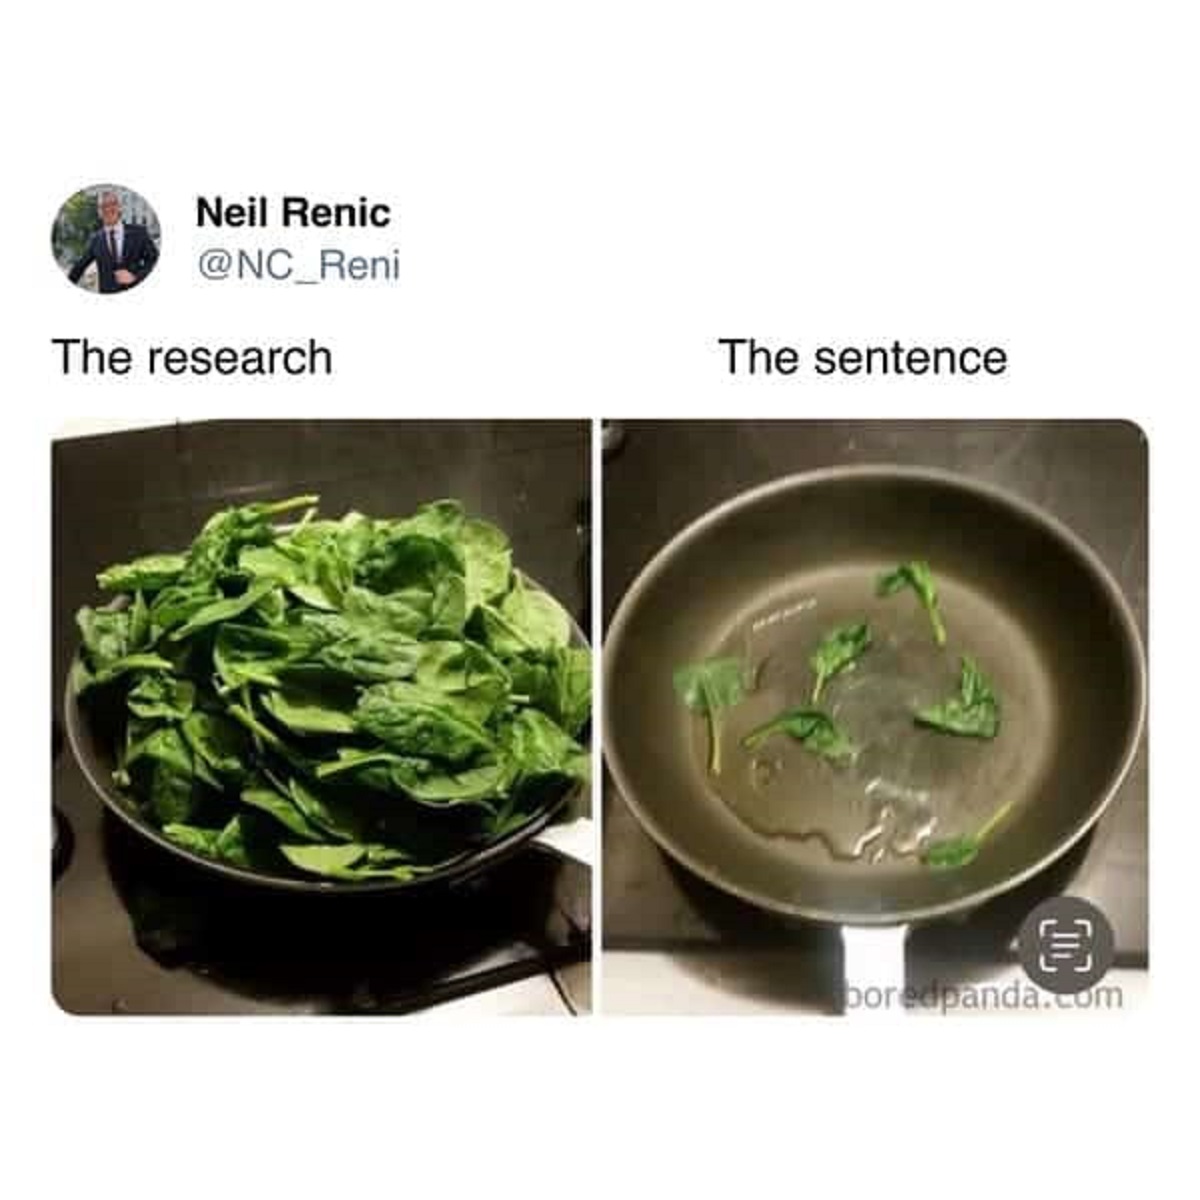 cooking memes - Neil Renic The research The sentence boredpanda.com